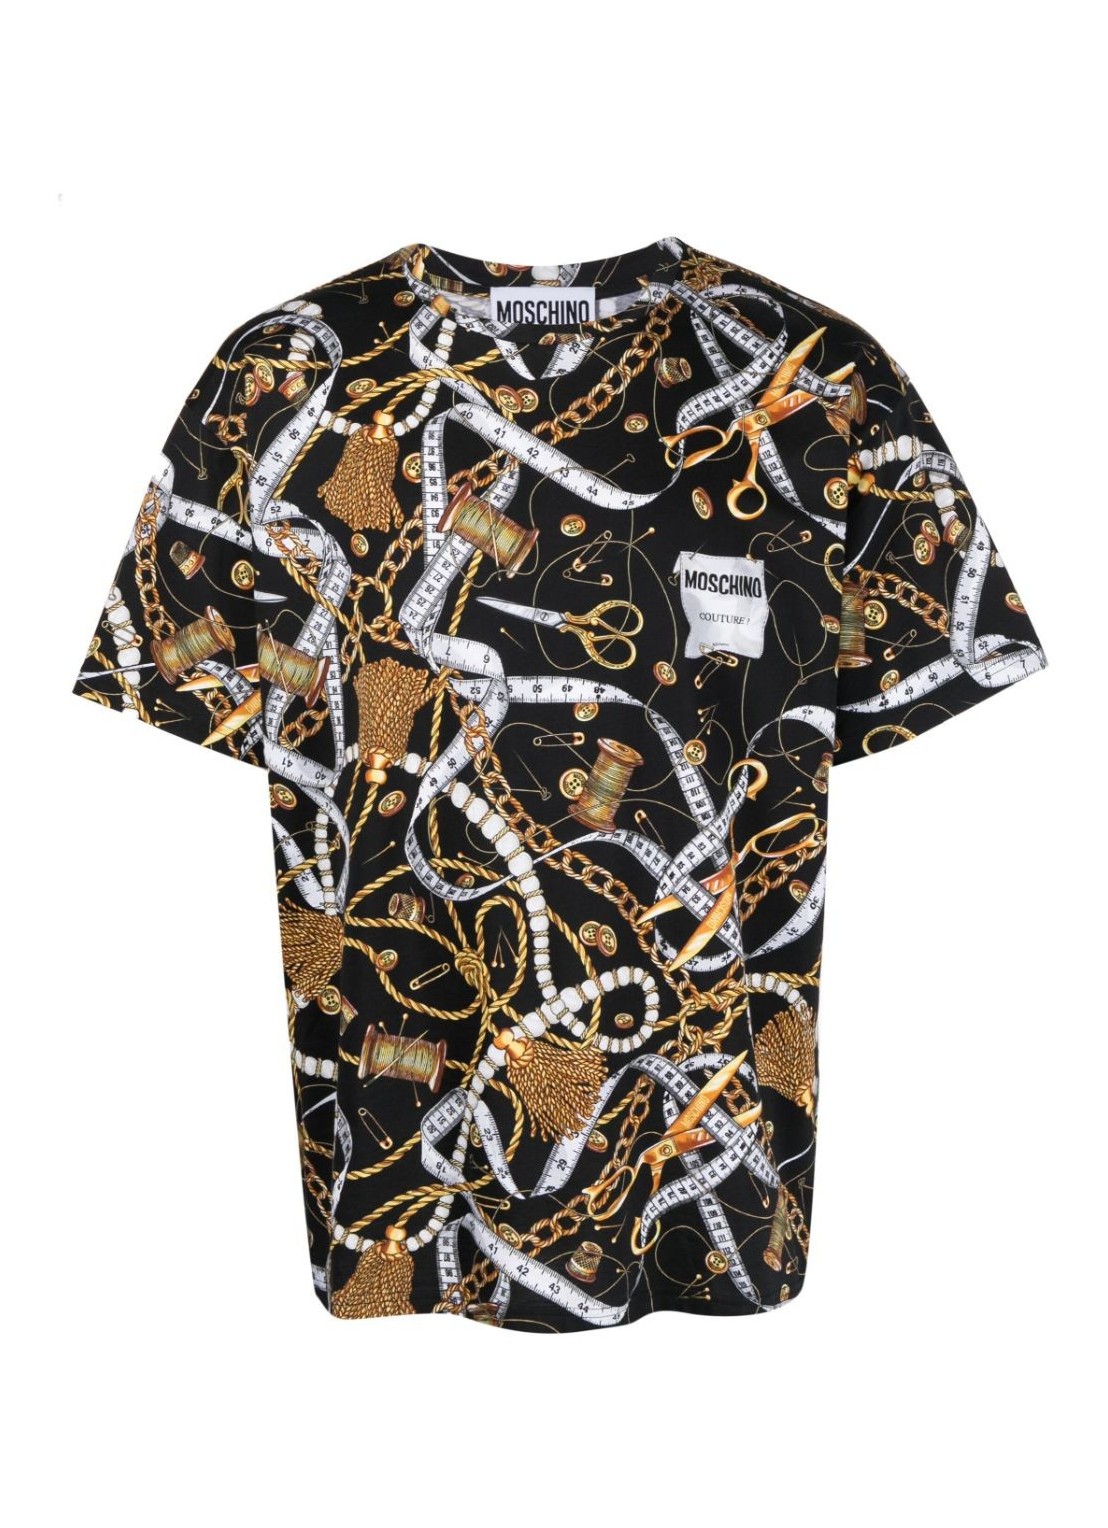 Camiseta moschino couture t-shirt man t-shirt 07205240 j1555 talla M
 